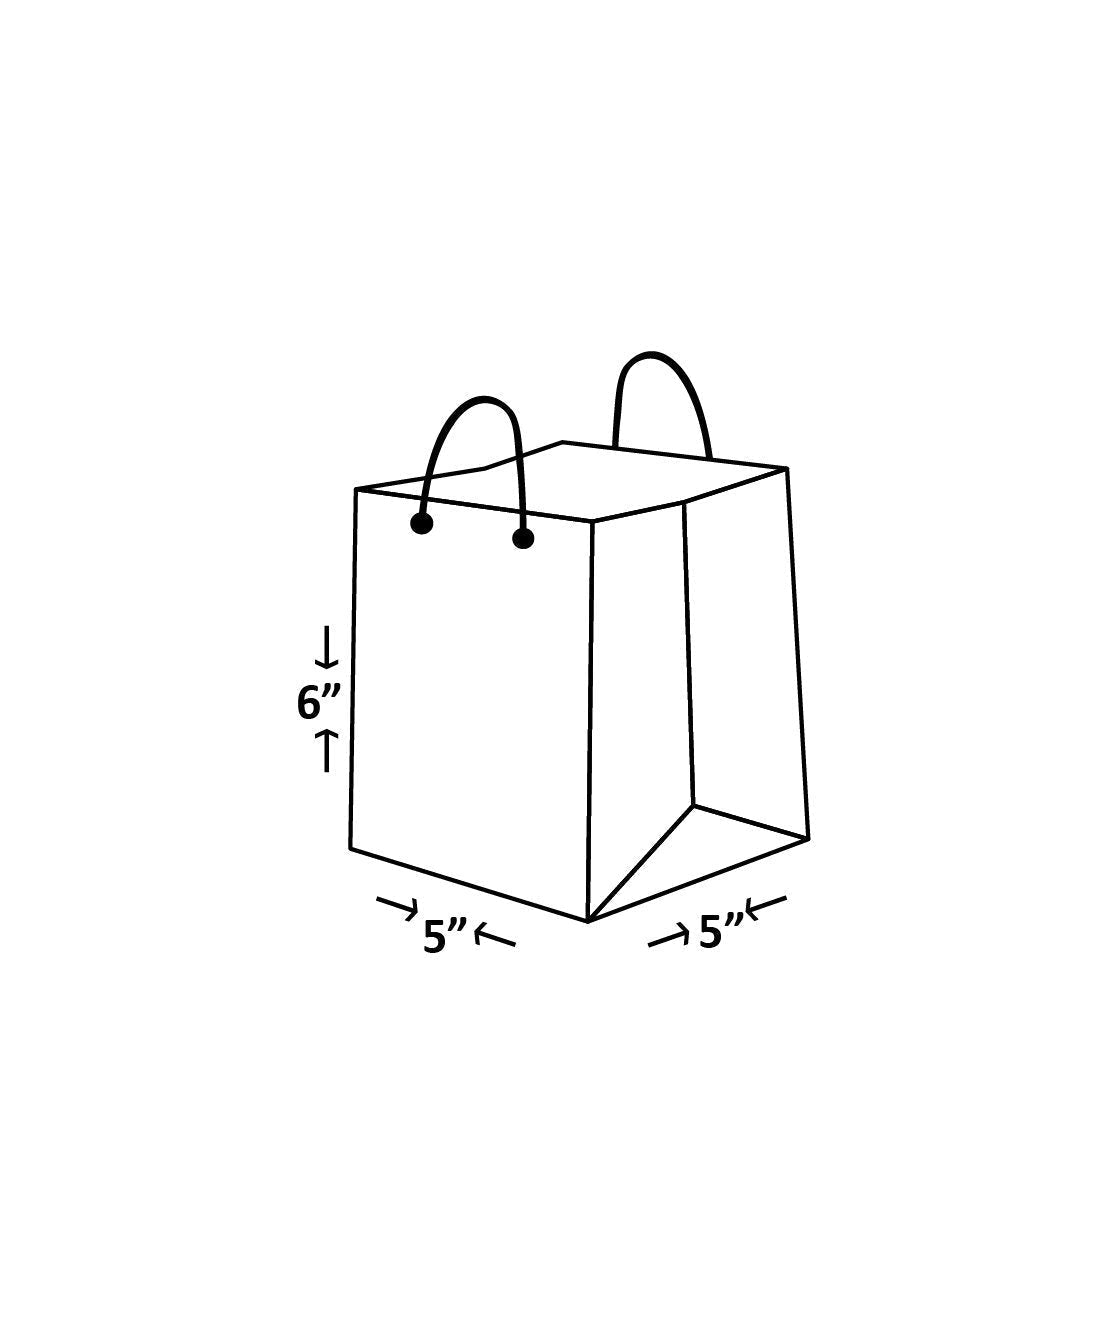 Plain White Design Bag for Packing Paper Bags